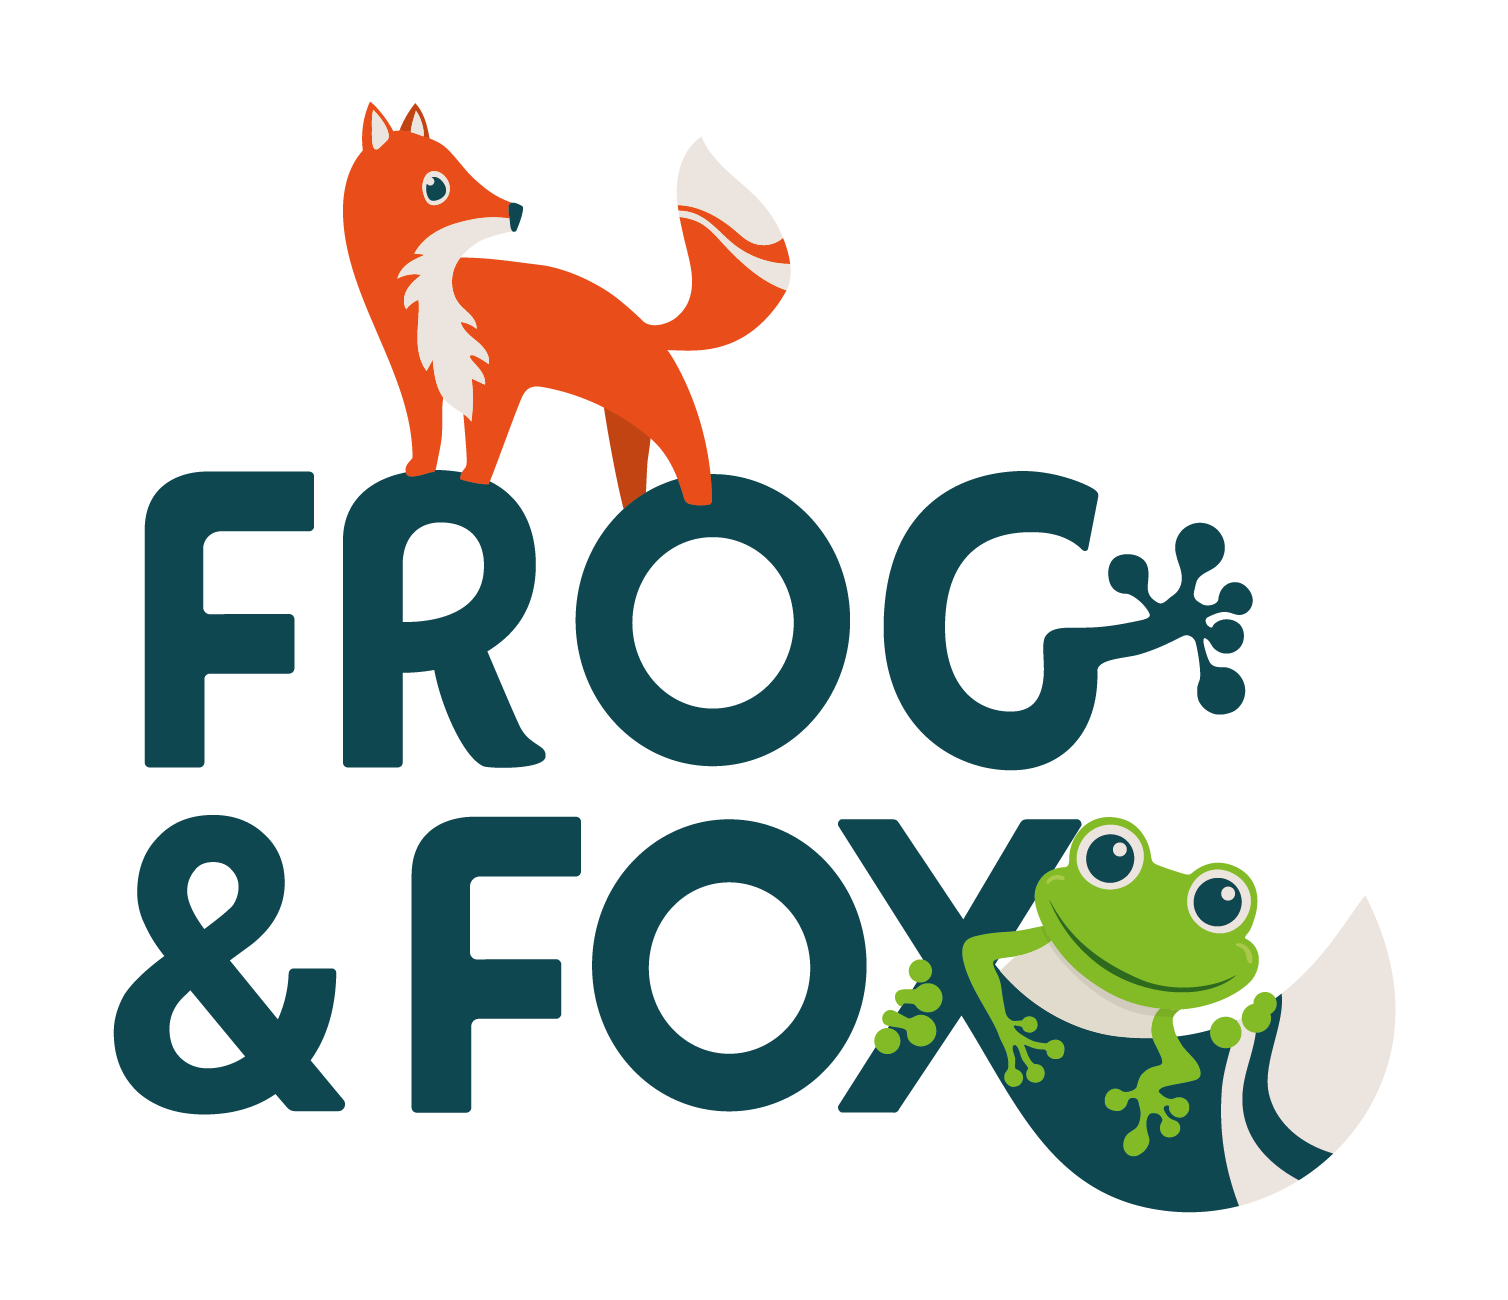 Frog and Fox logo by helen wyllie